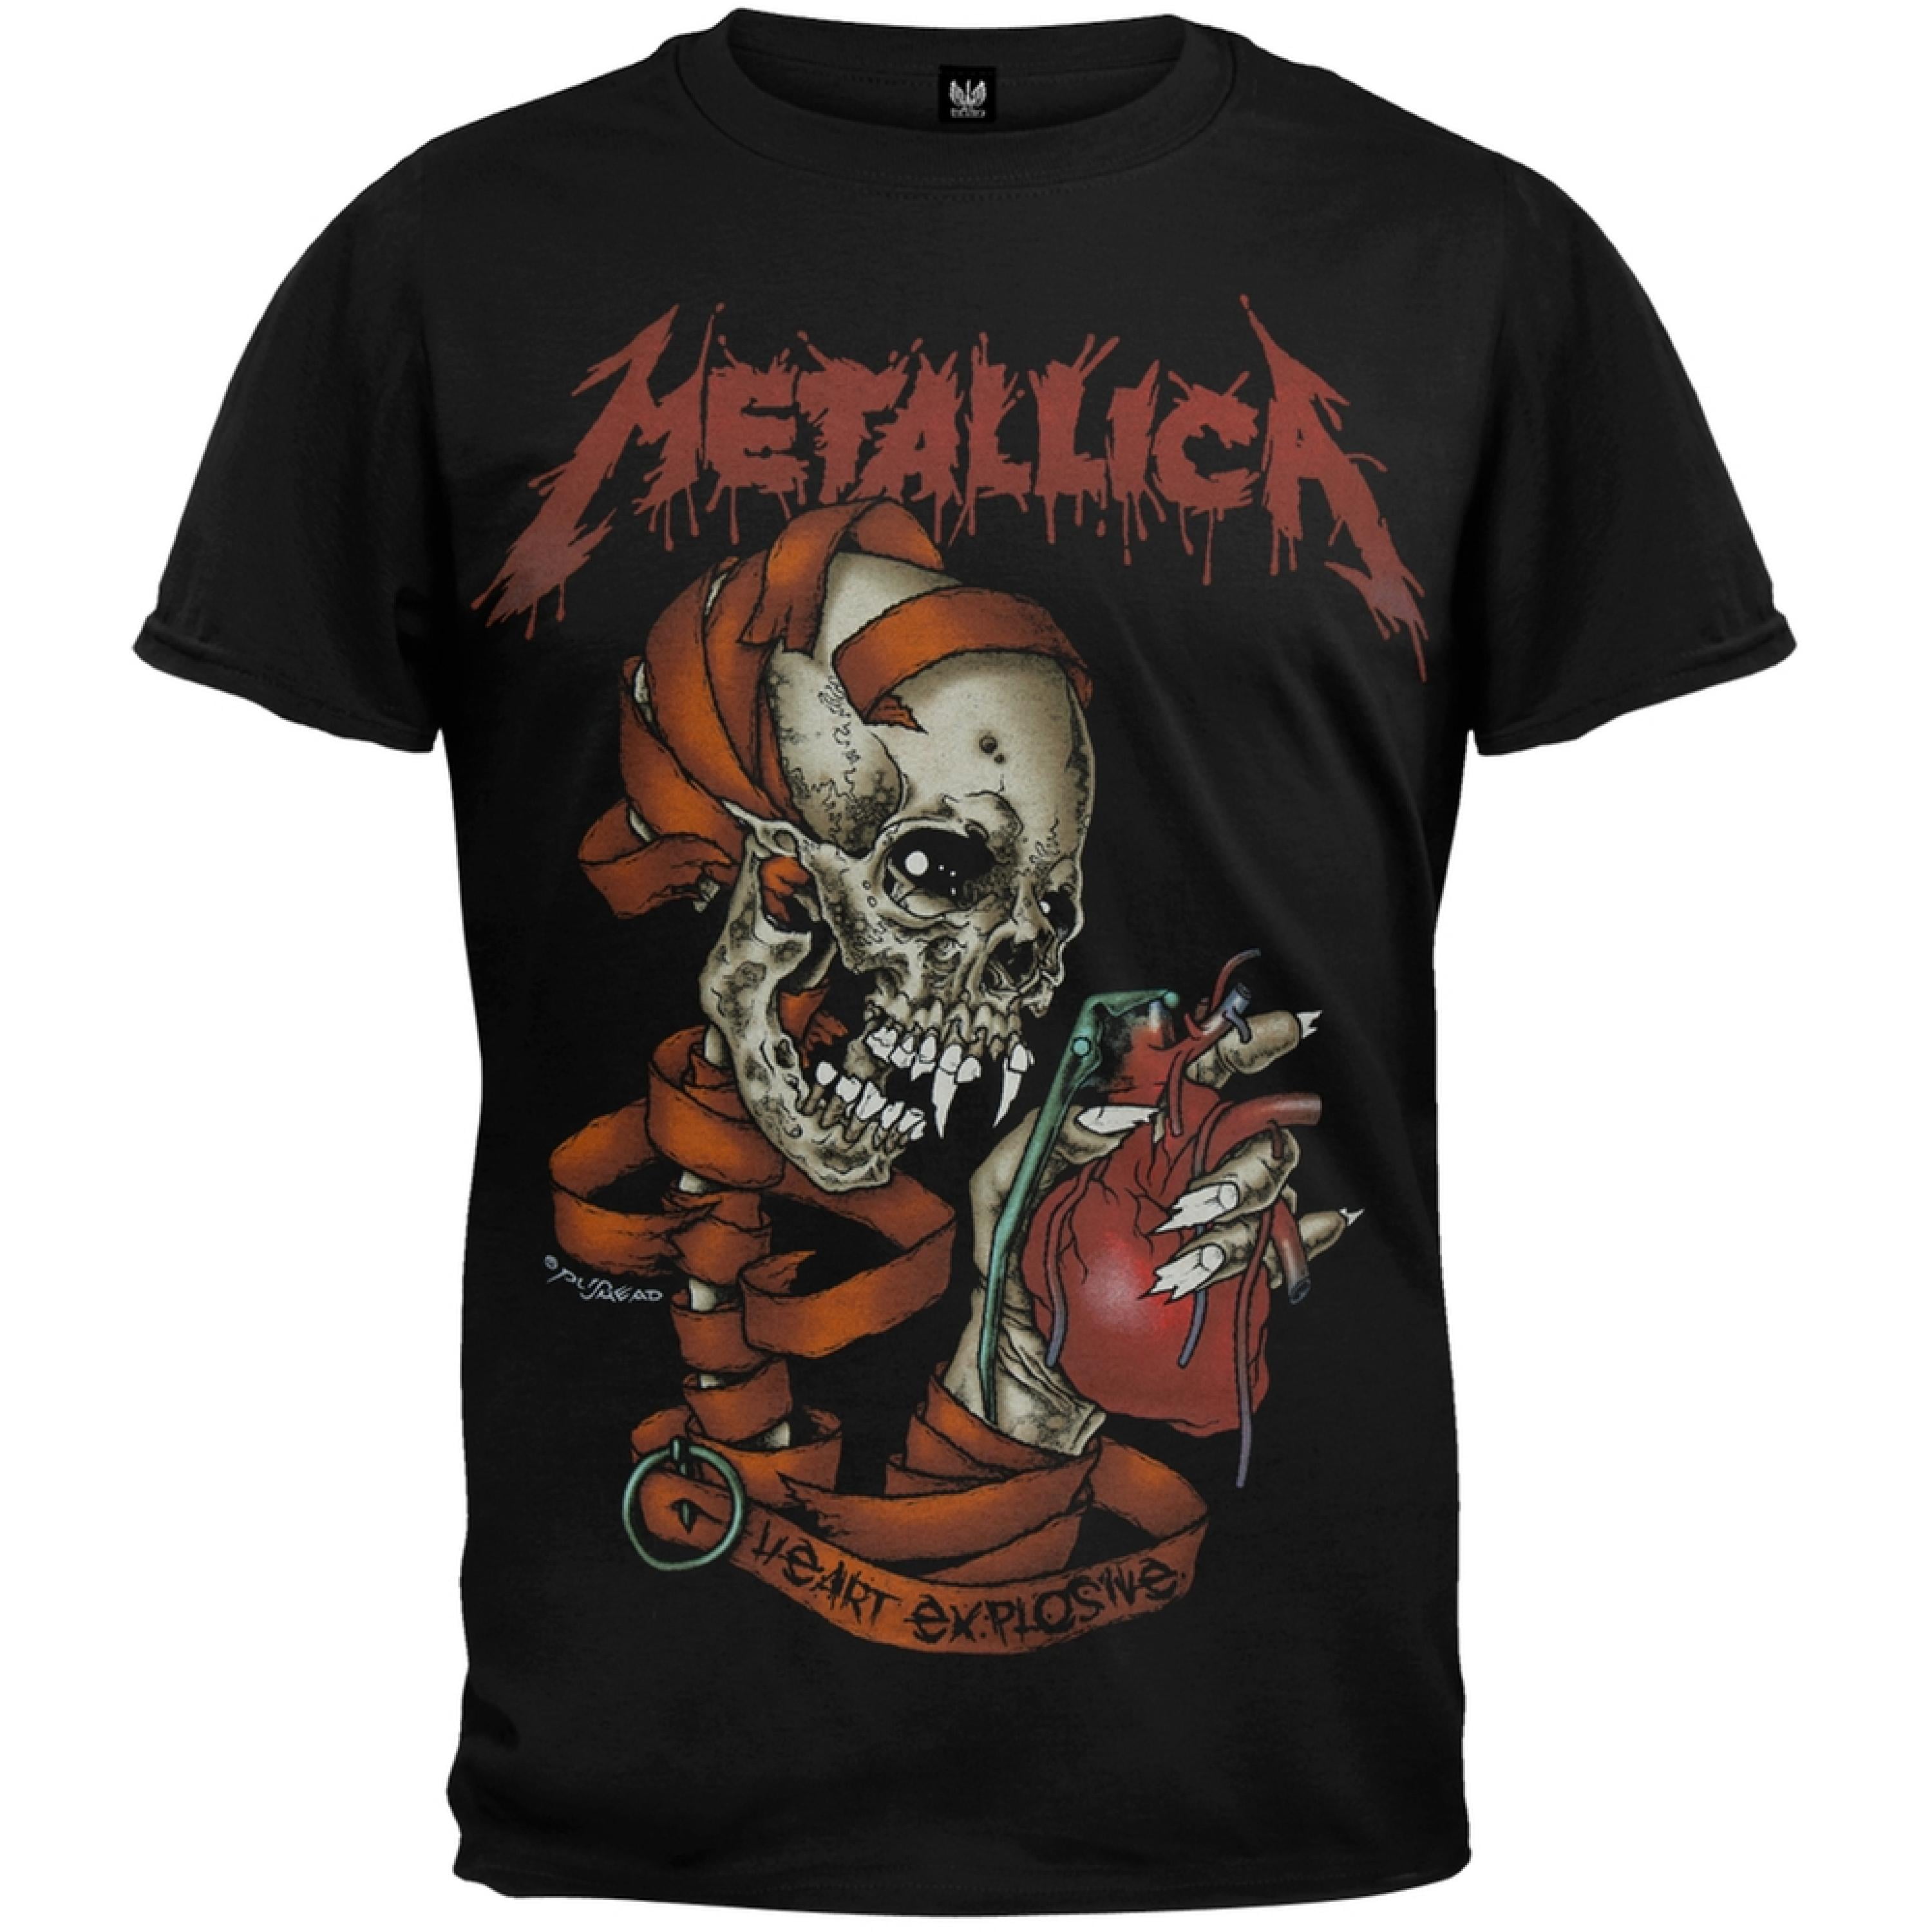 Metallica - Heart Explosive T-Shirt - Walmart.com